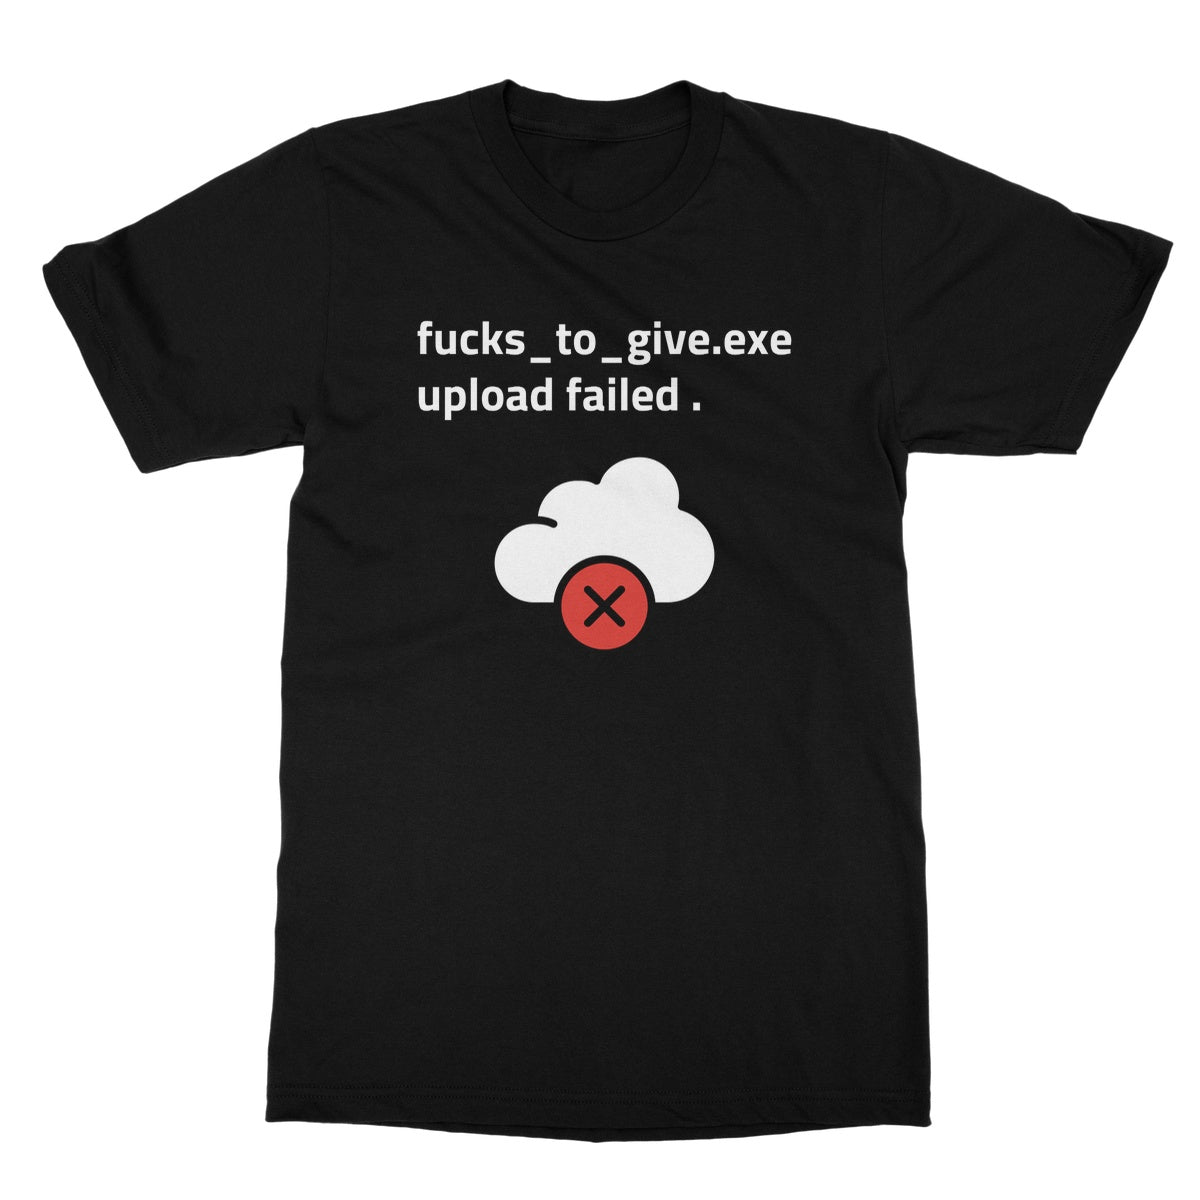 fucks to give upload failed t shirt black